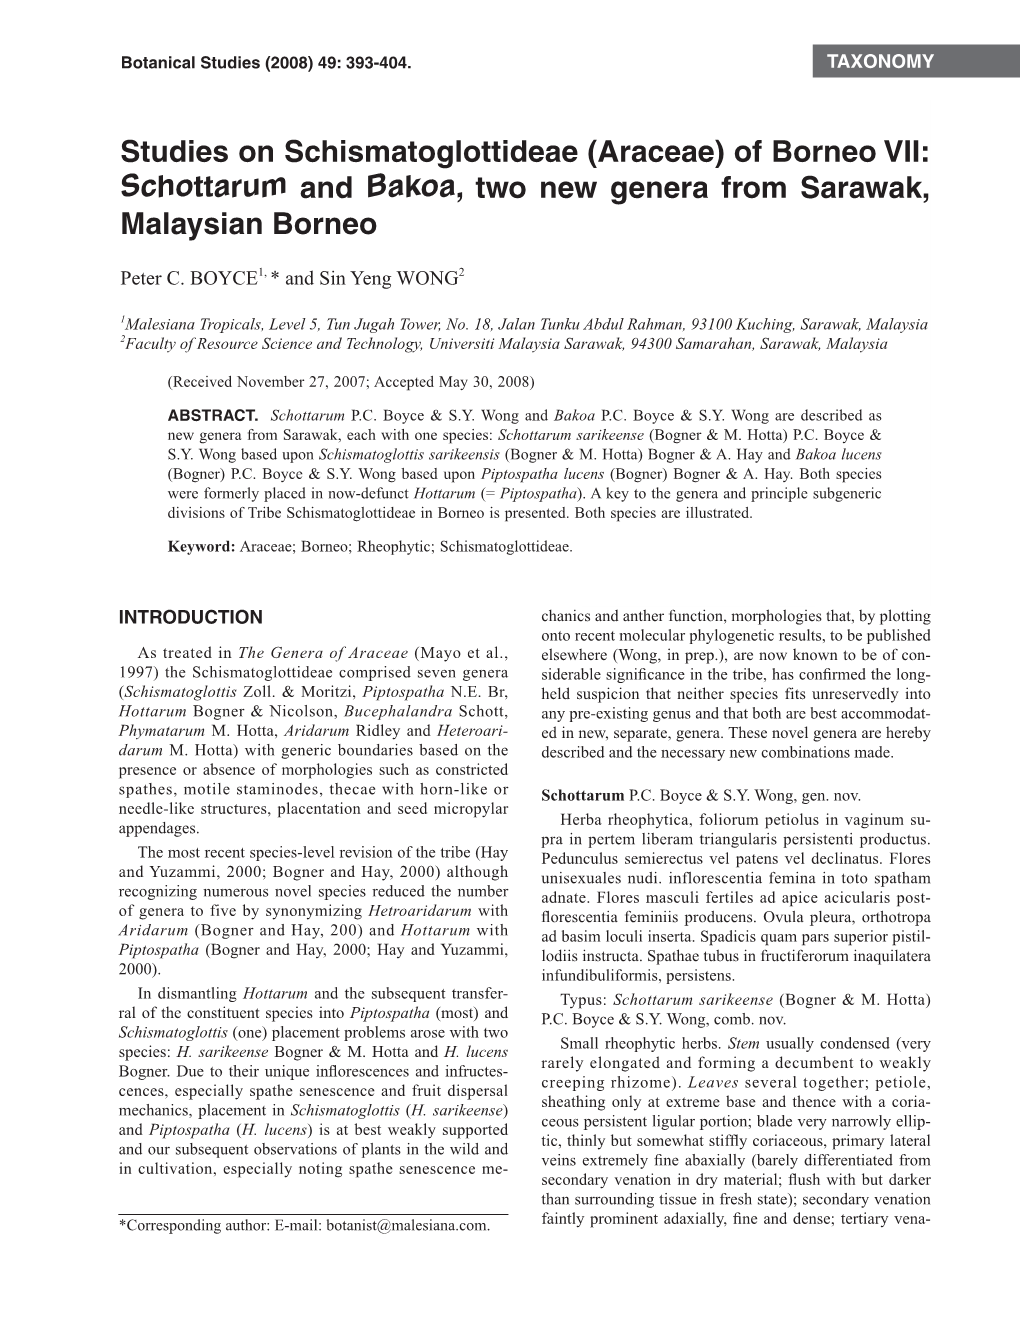 Studies on Schismatoglottideae (Araceae) of Borneo VII: Schottarum and Bakoa, Two New Genera from Sarawak, Malaysian Borneo